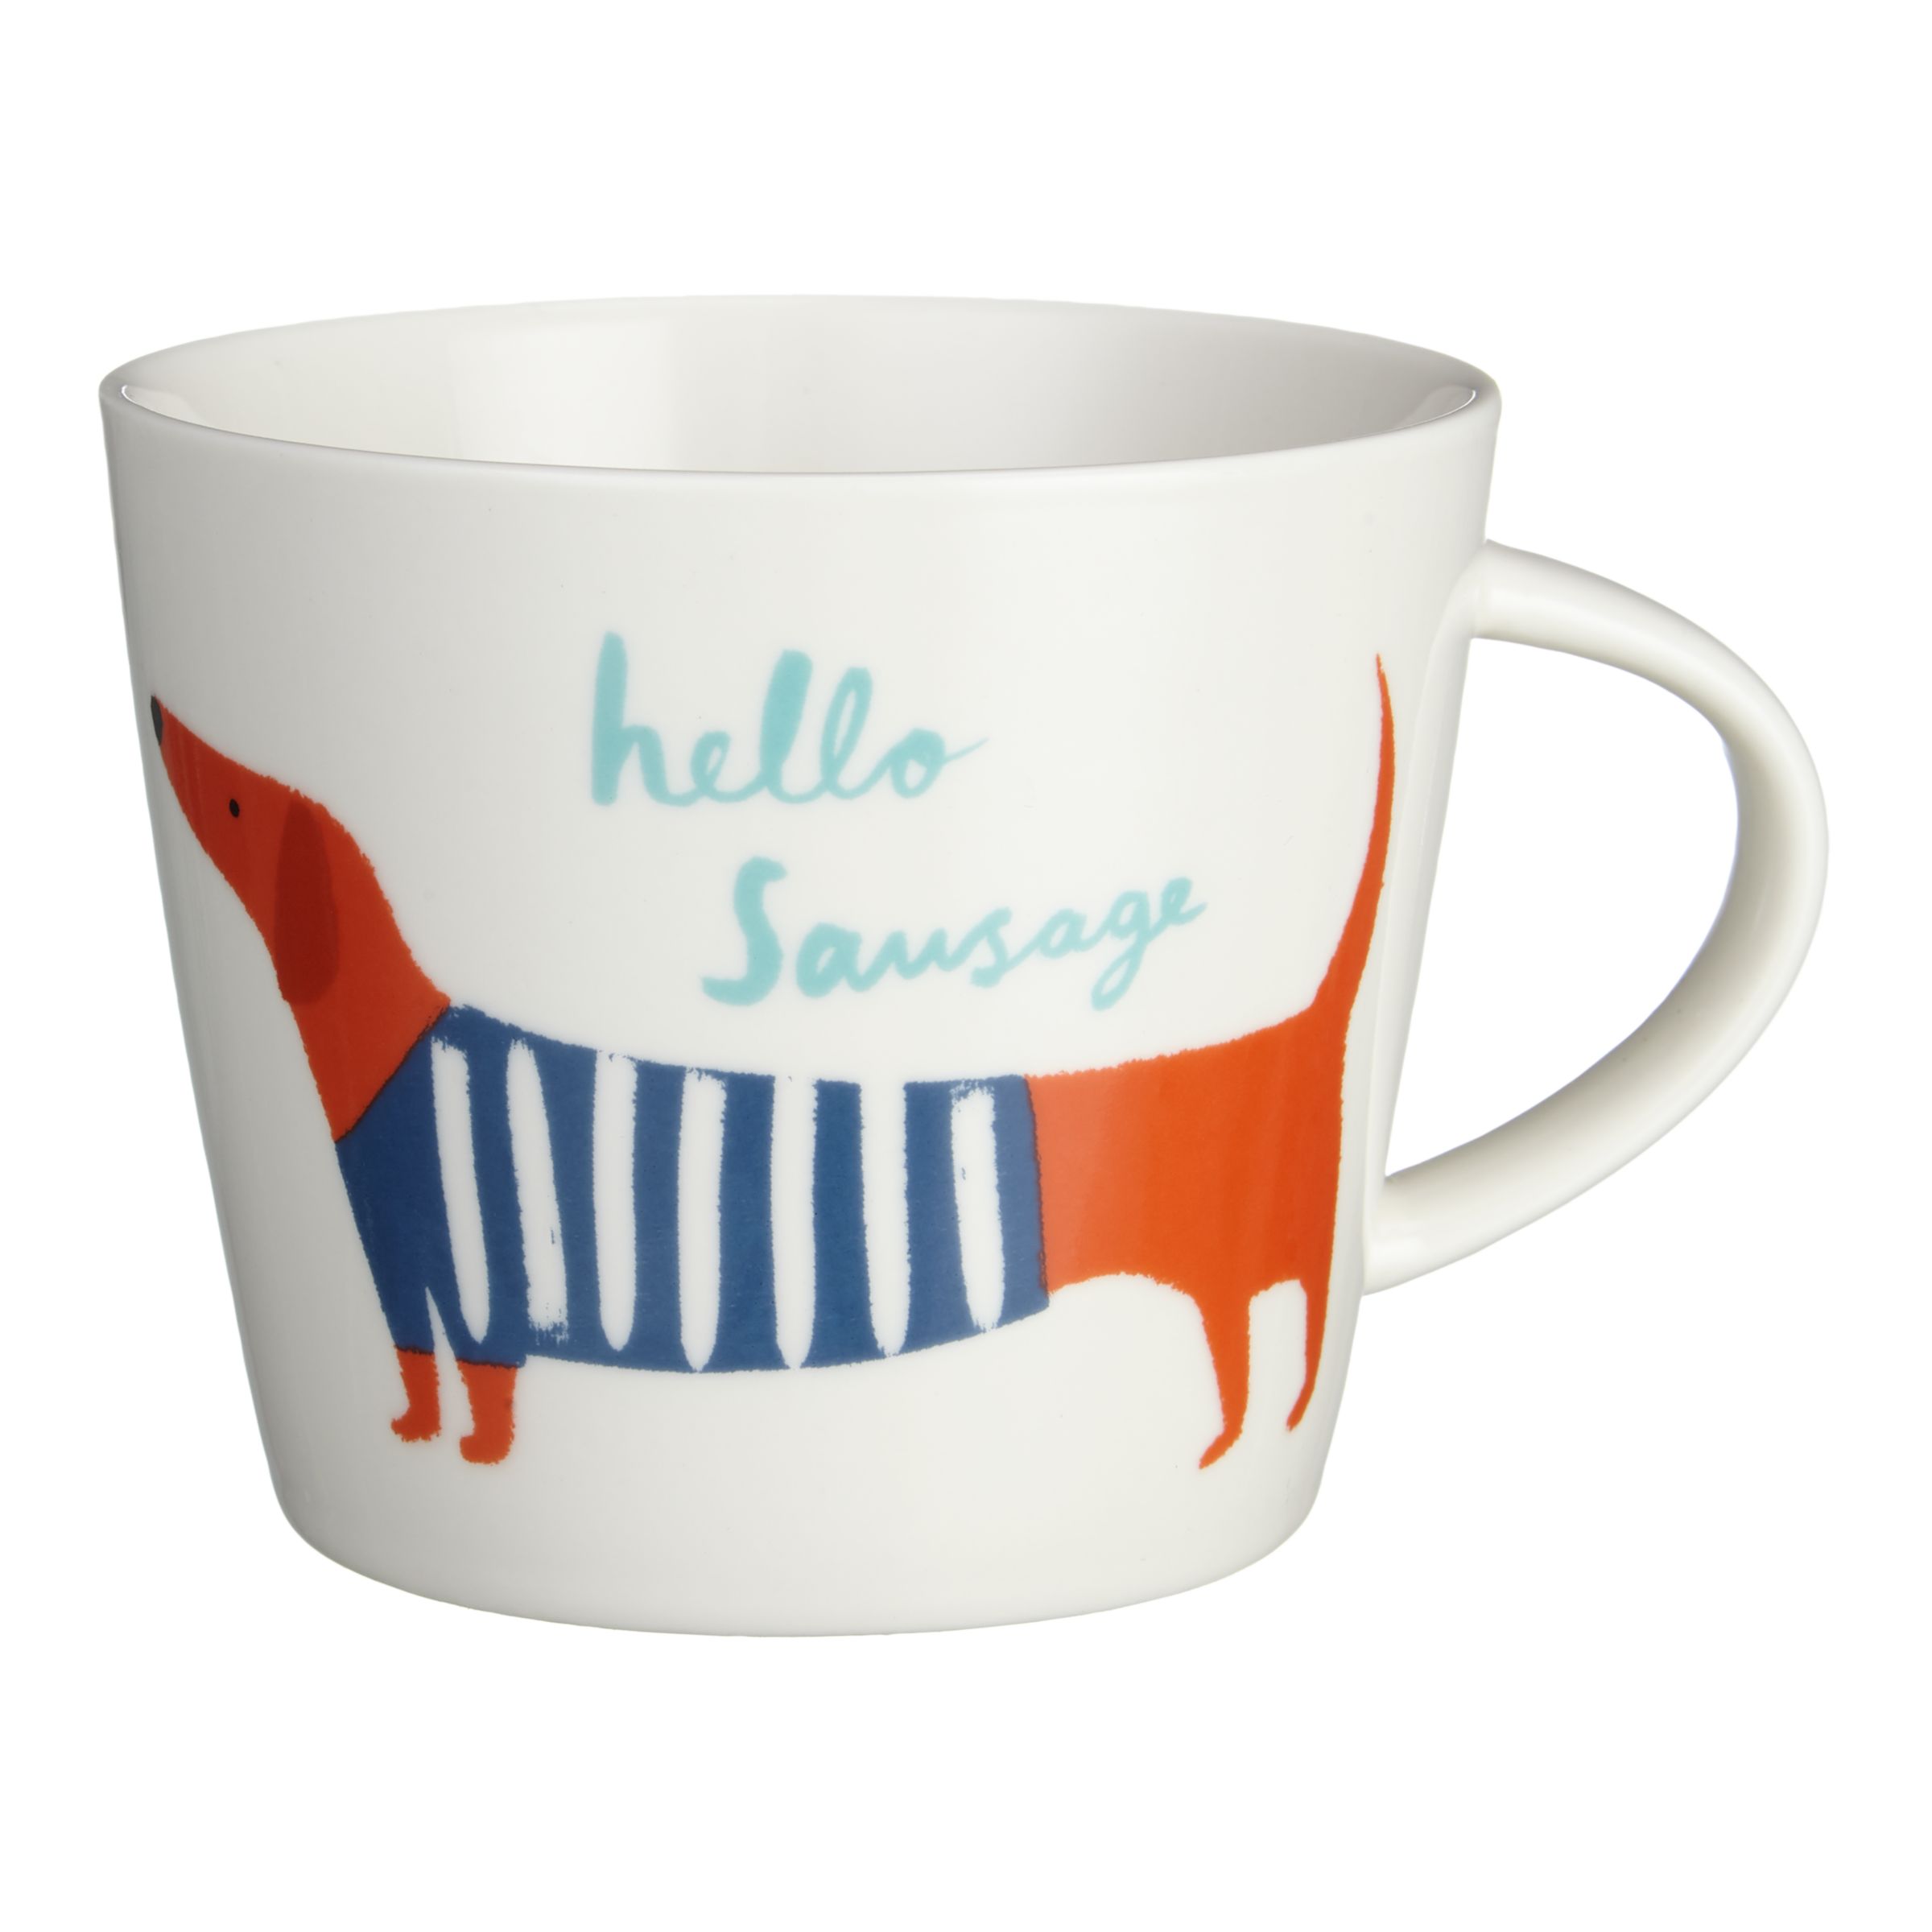 John Lewis & Partners 'Hello Sausage' Mug, 300ml, White/Multi